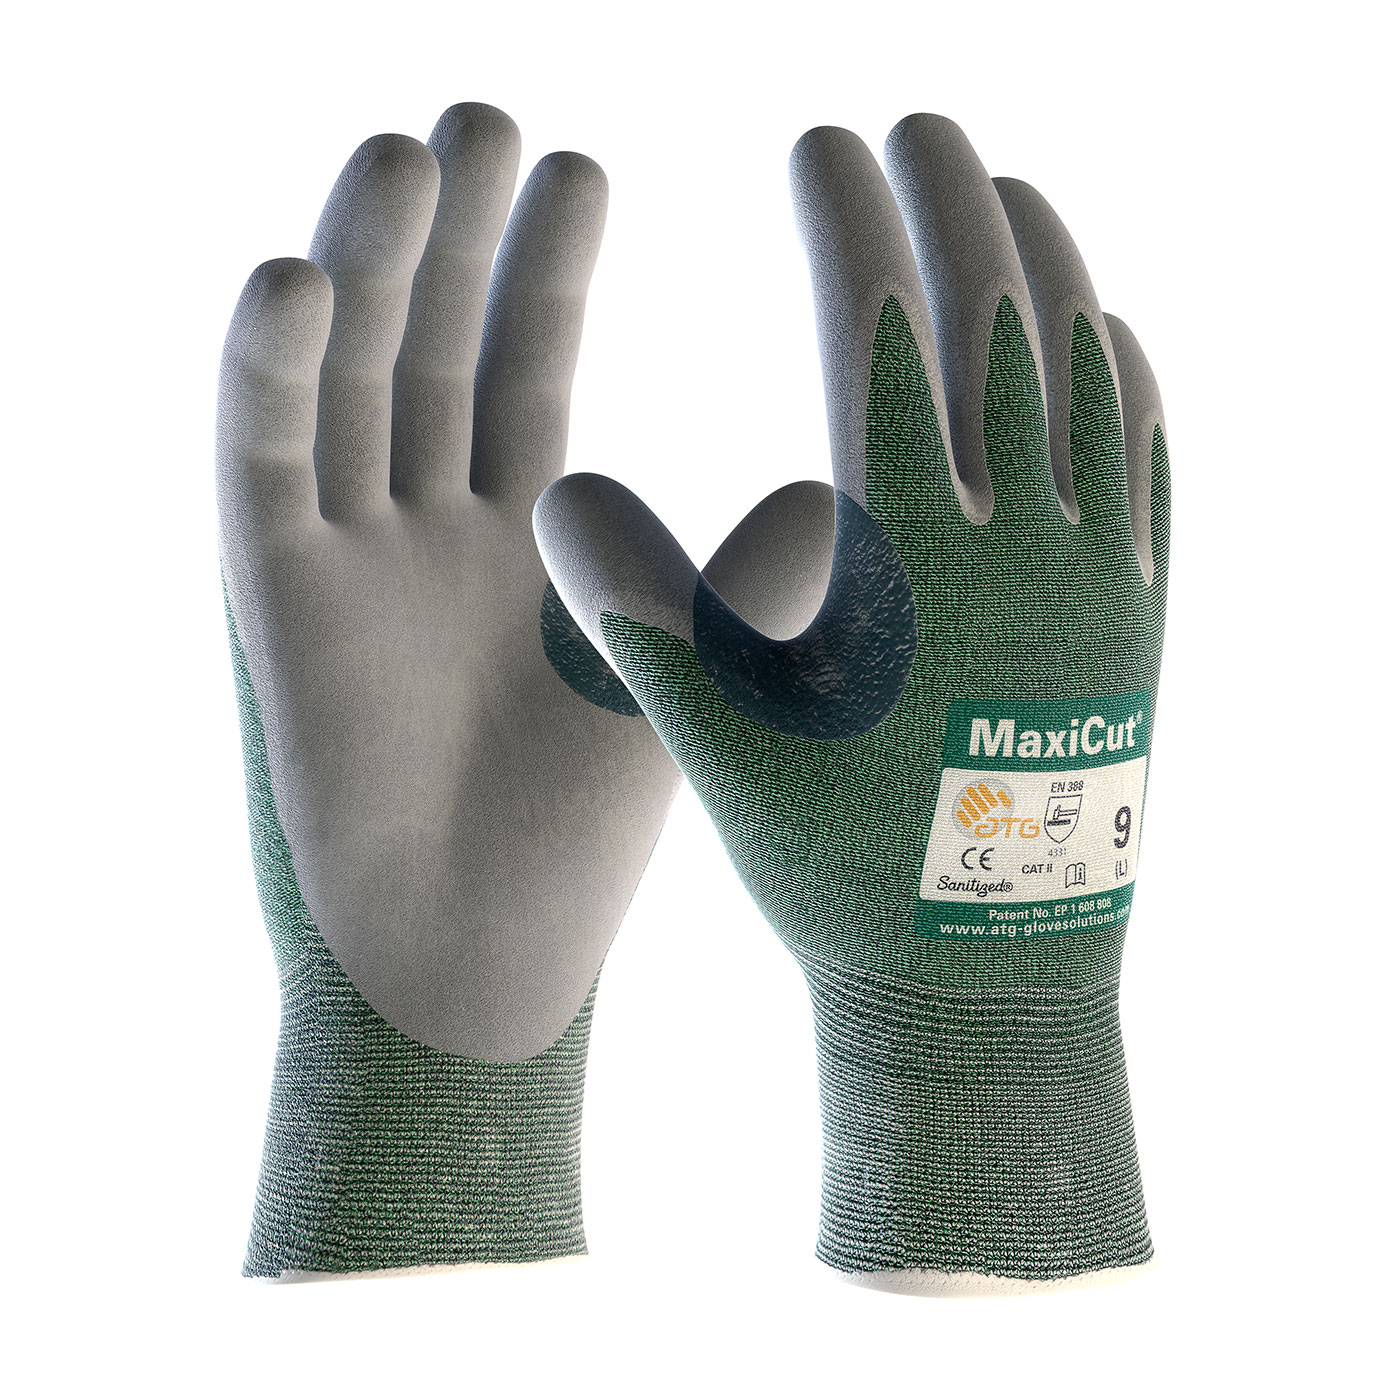 PIP 18-570/M MaxiCut Seamless Knit Engineered Yarn Glove with Nitrile Coated MicroFoam Grip on Palm & Fingers - Medium PID-18570M